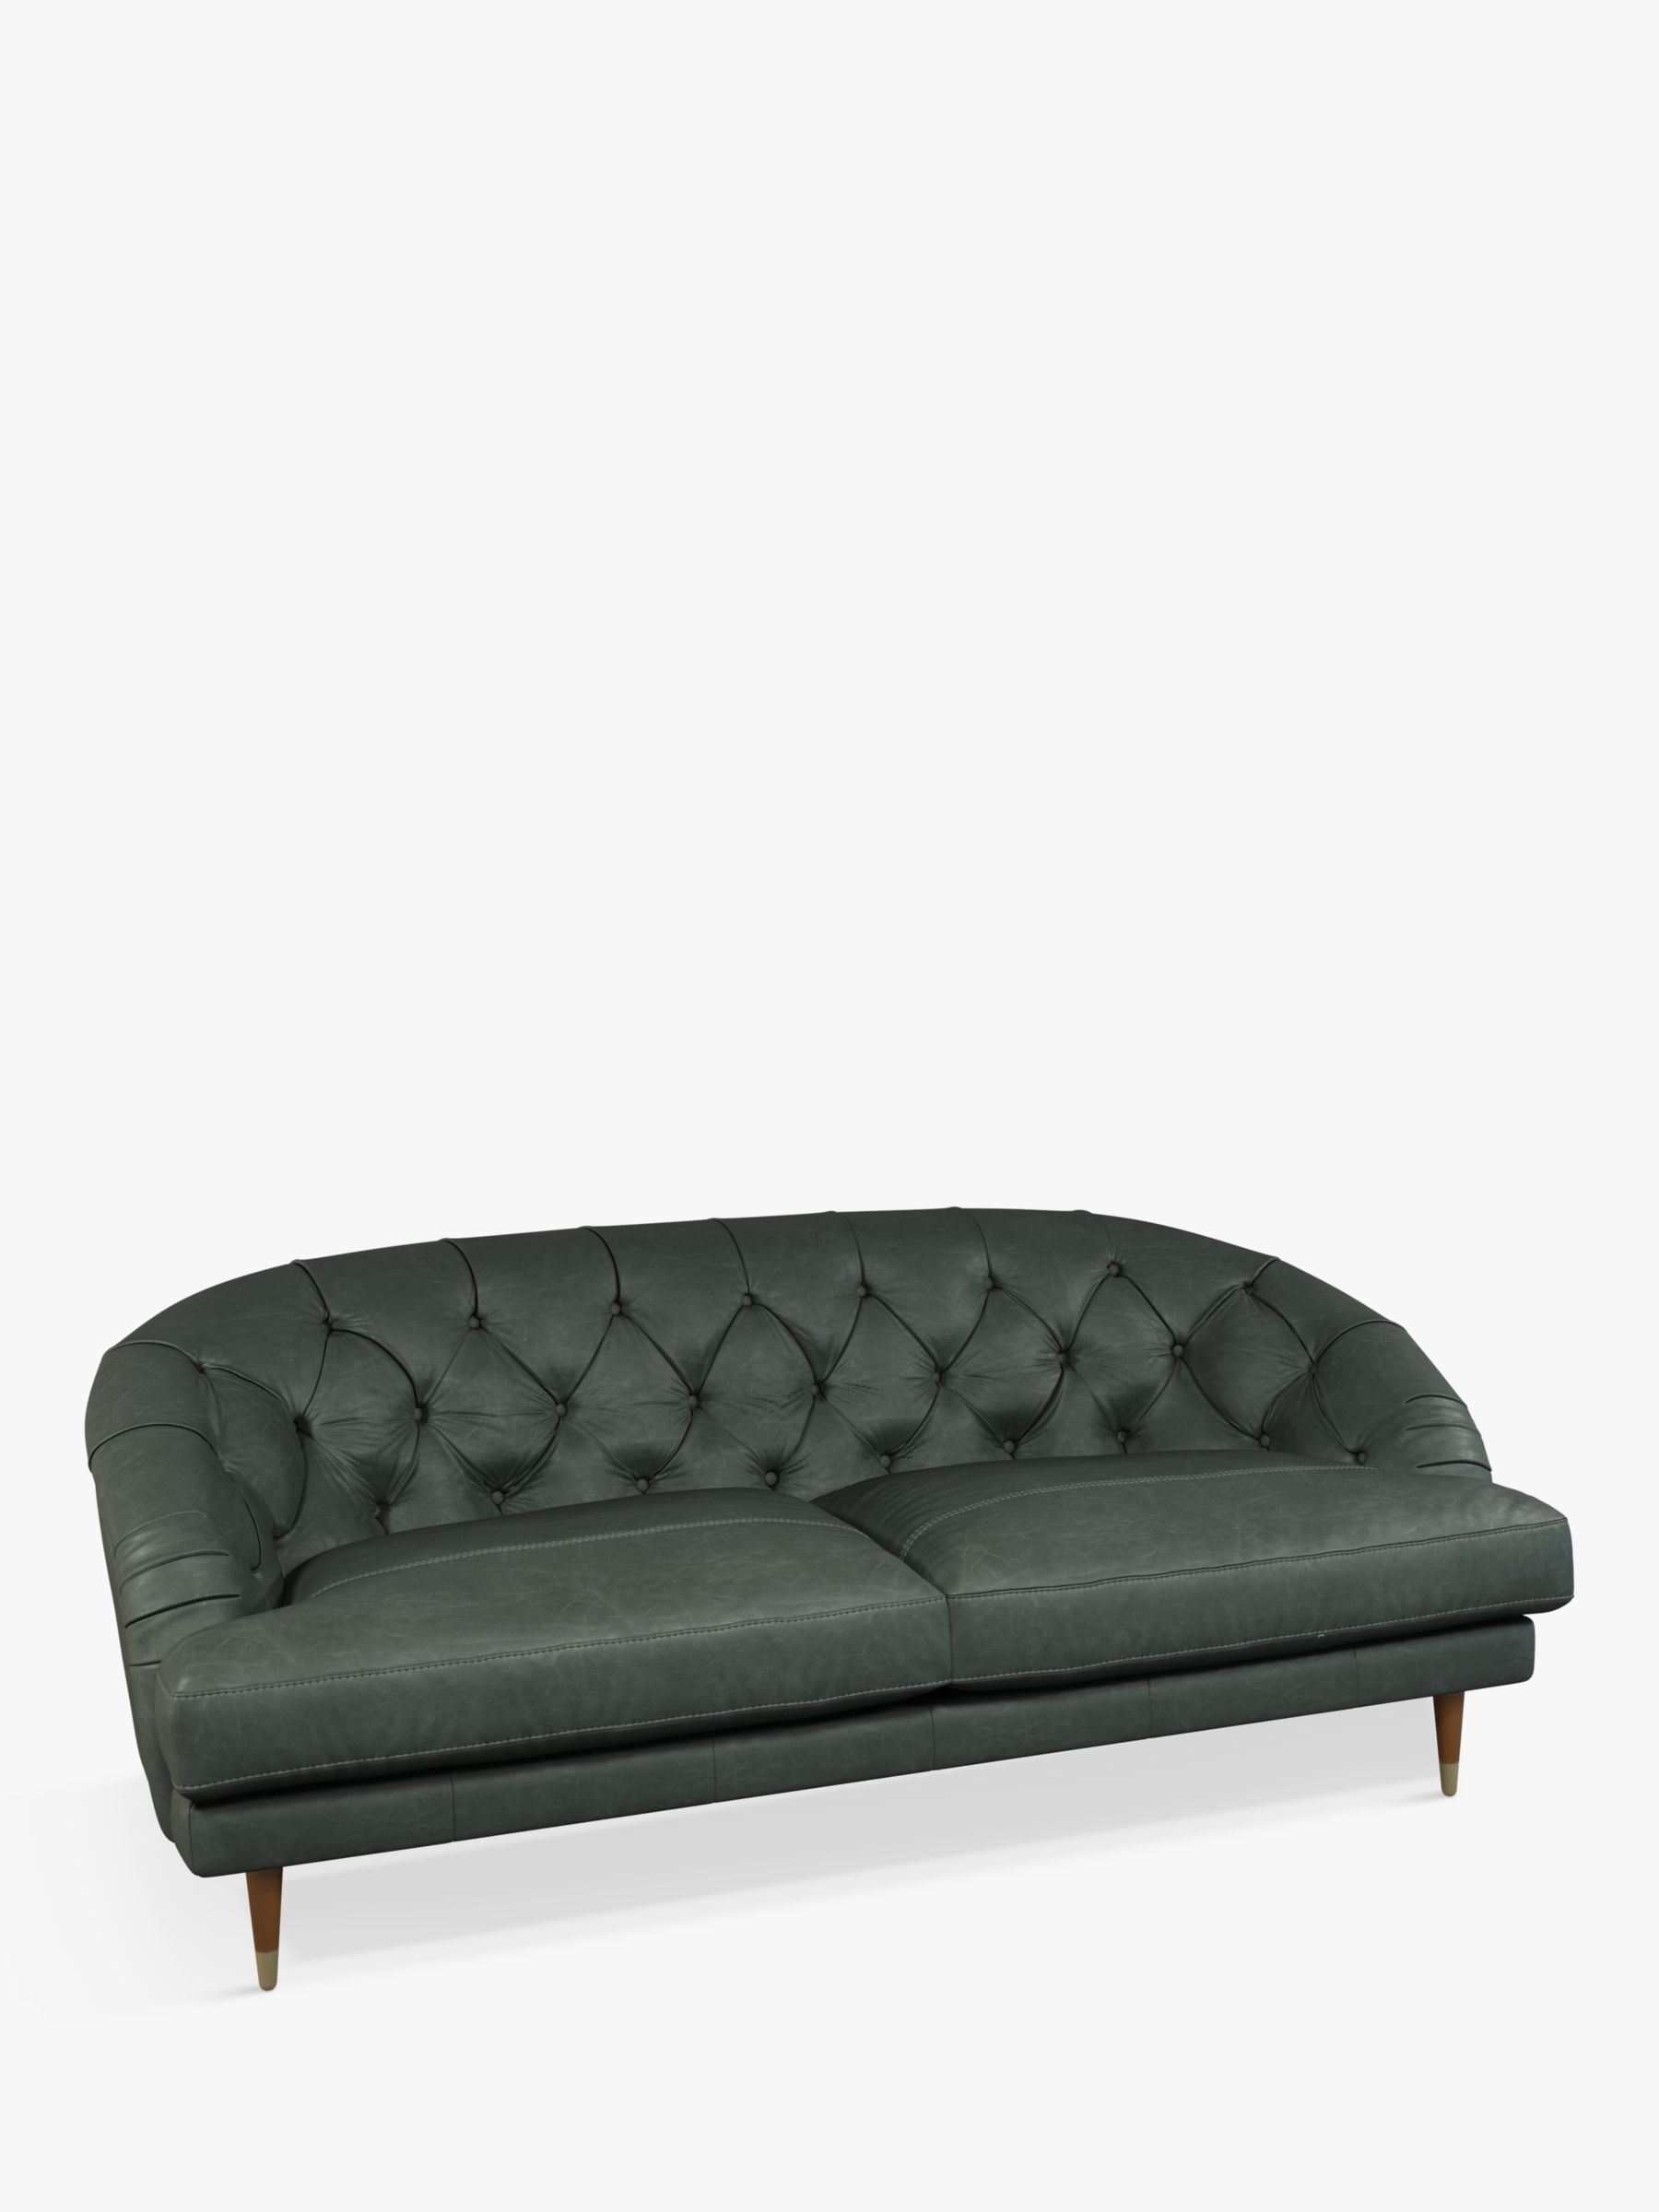 Photo of John lewis + swoon radley large 3 seater leather sofa